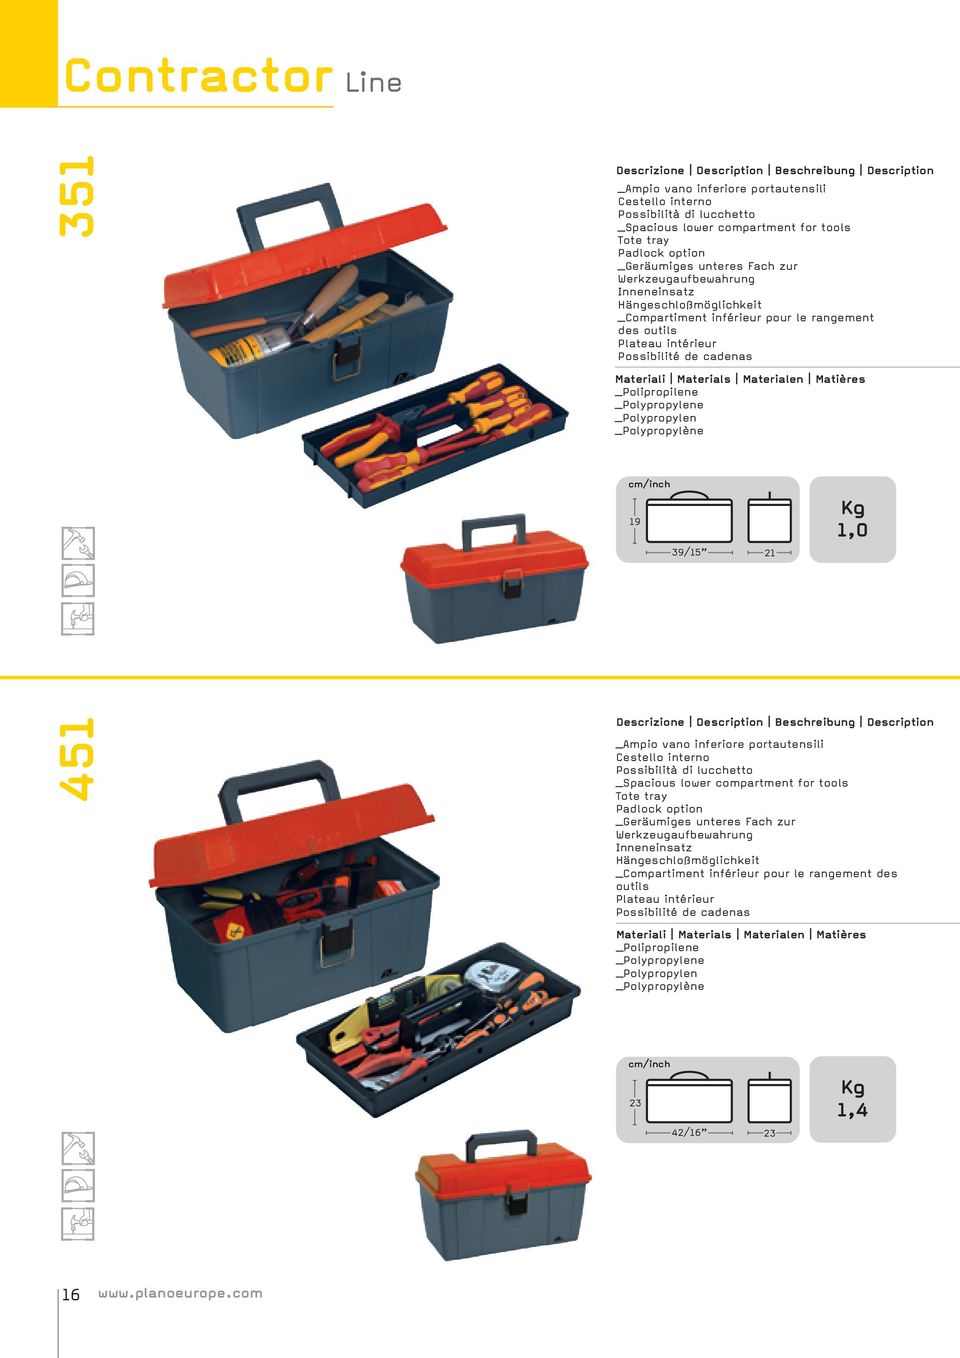 1,0 451 _Ampio vano inferiore portautensili Cestello interno _Spacious lower compartment for tools Tote tray _Geräumiges unteres Fach